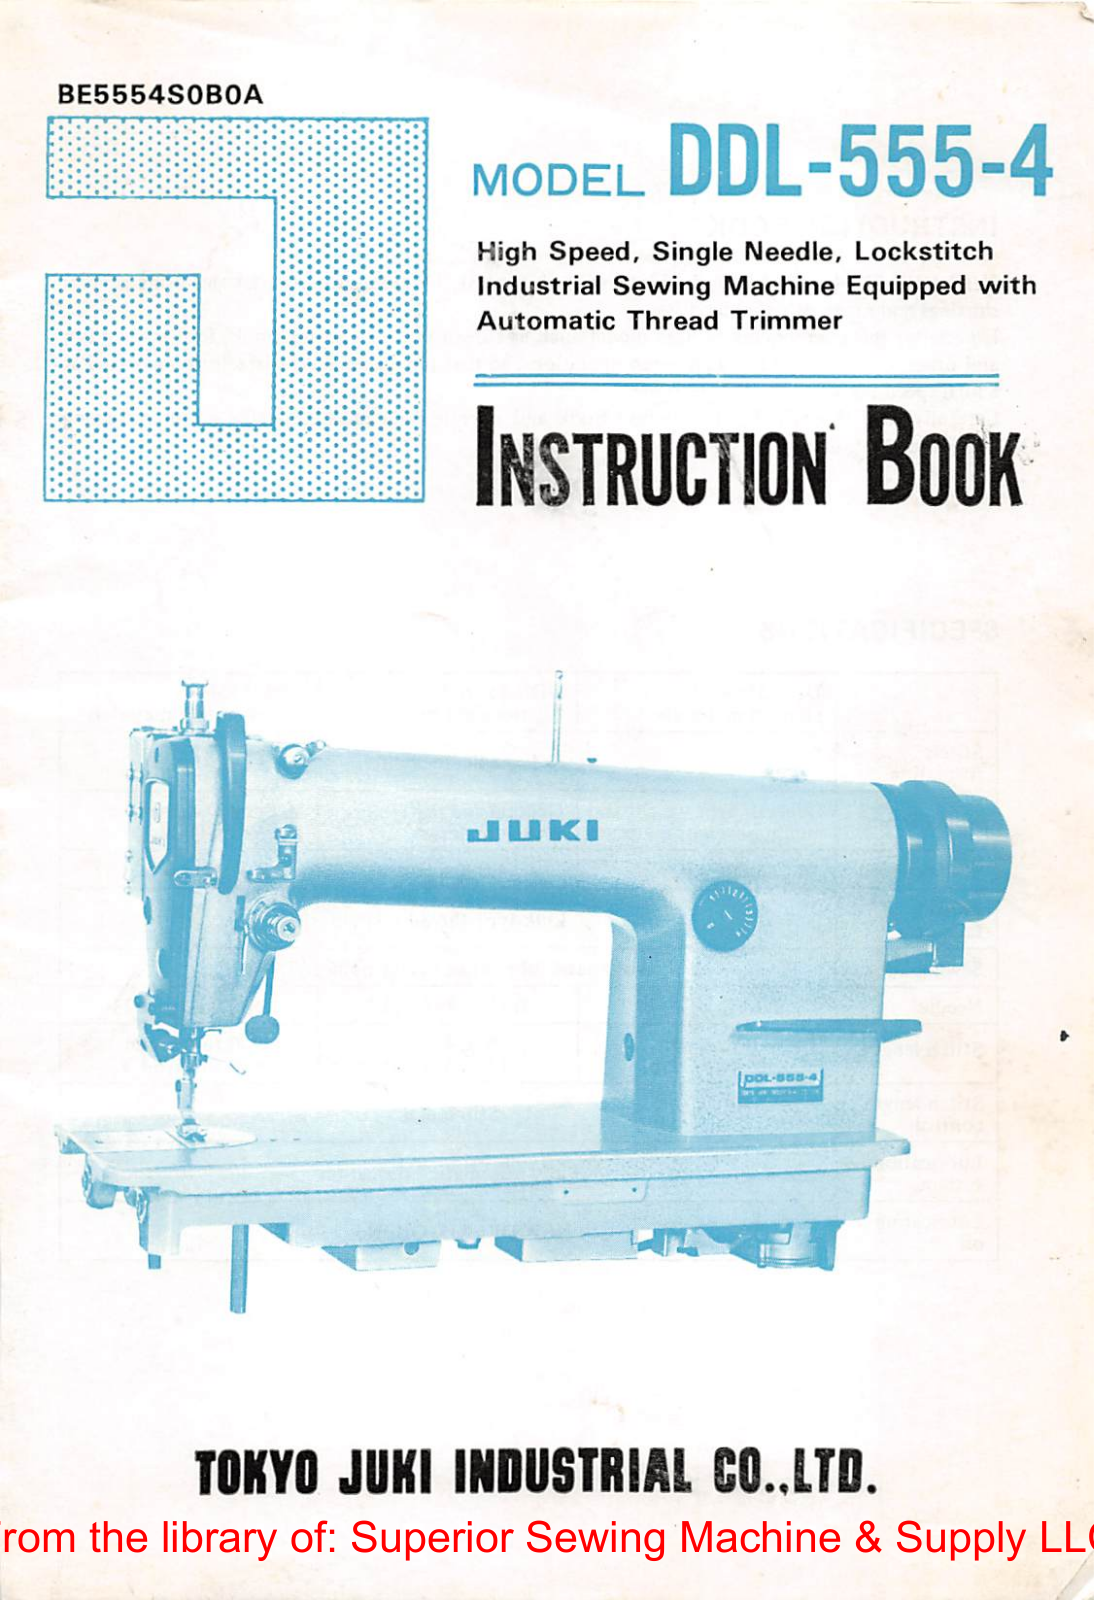 Juki DDL-555-4 Instruction Manual